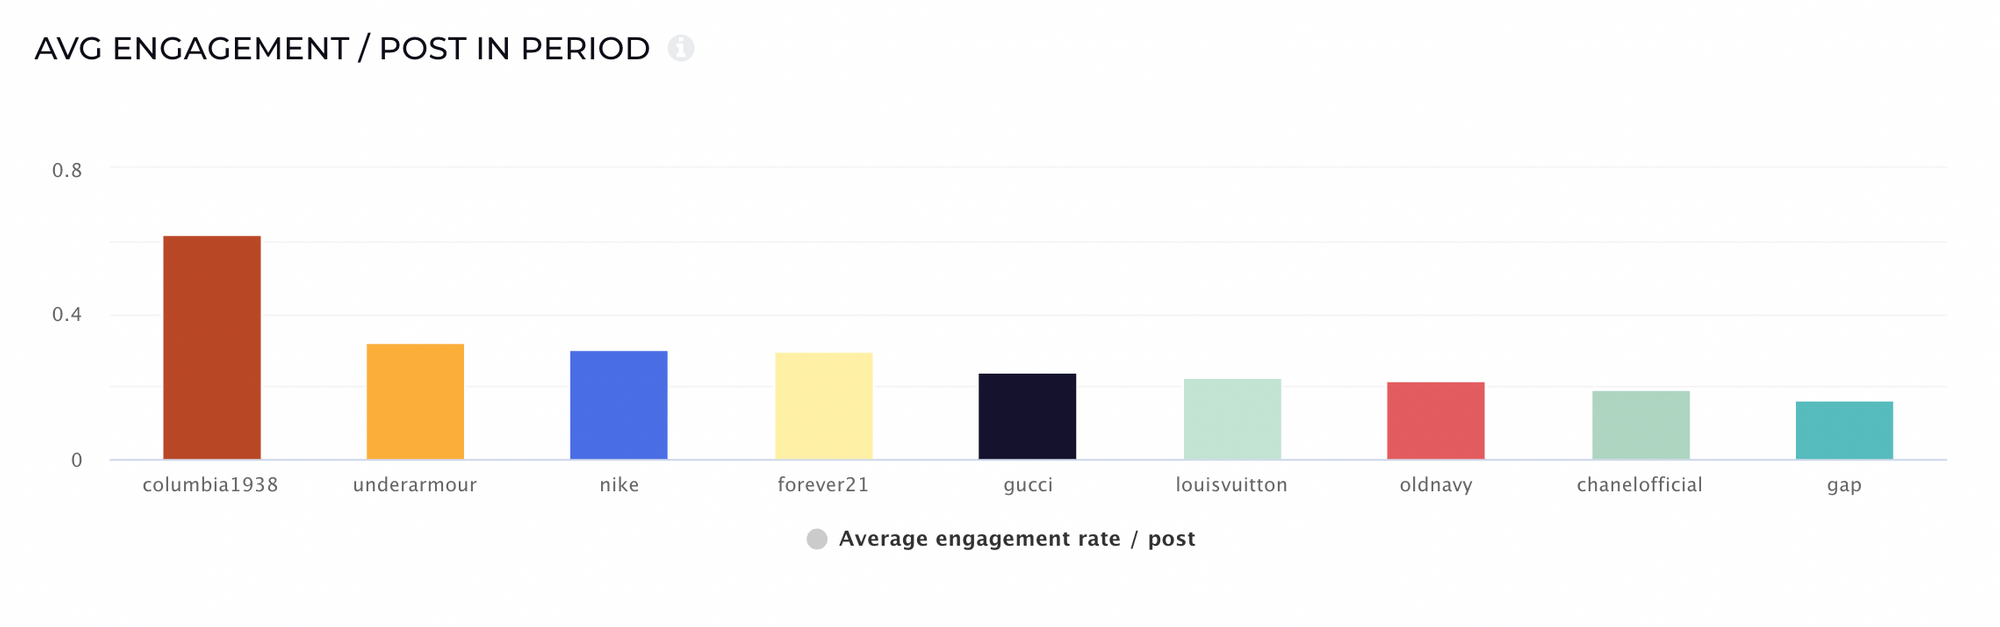 Sportswear average engagement statistics based on Socialinsider analytics.